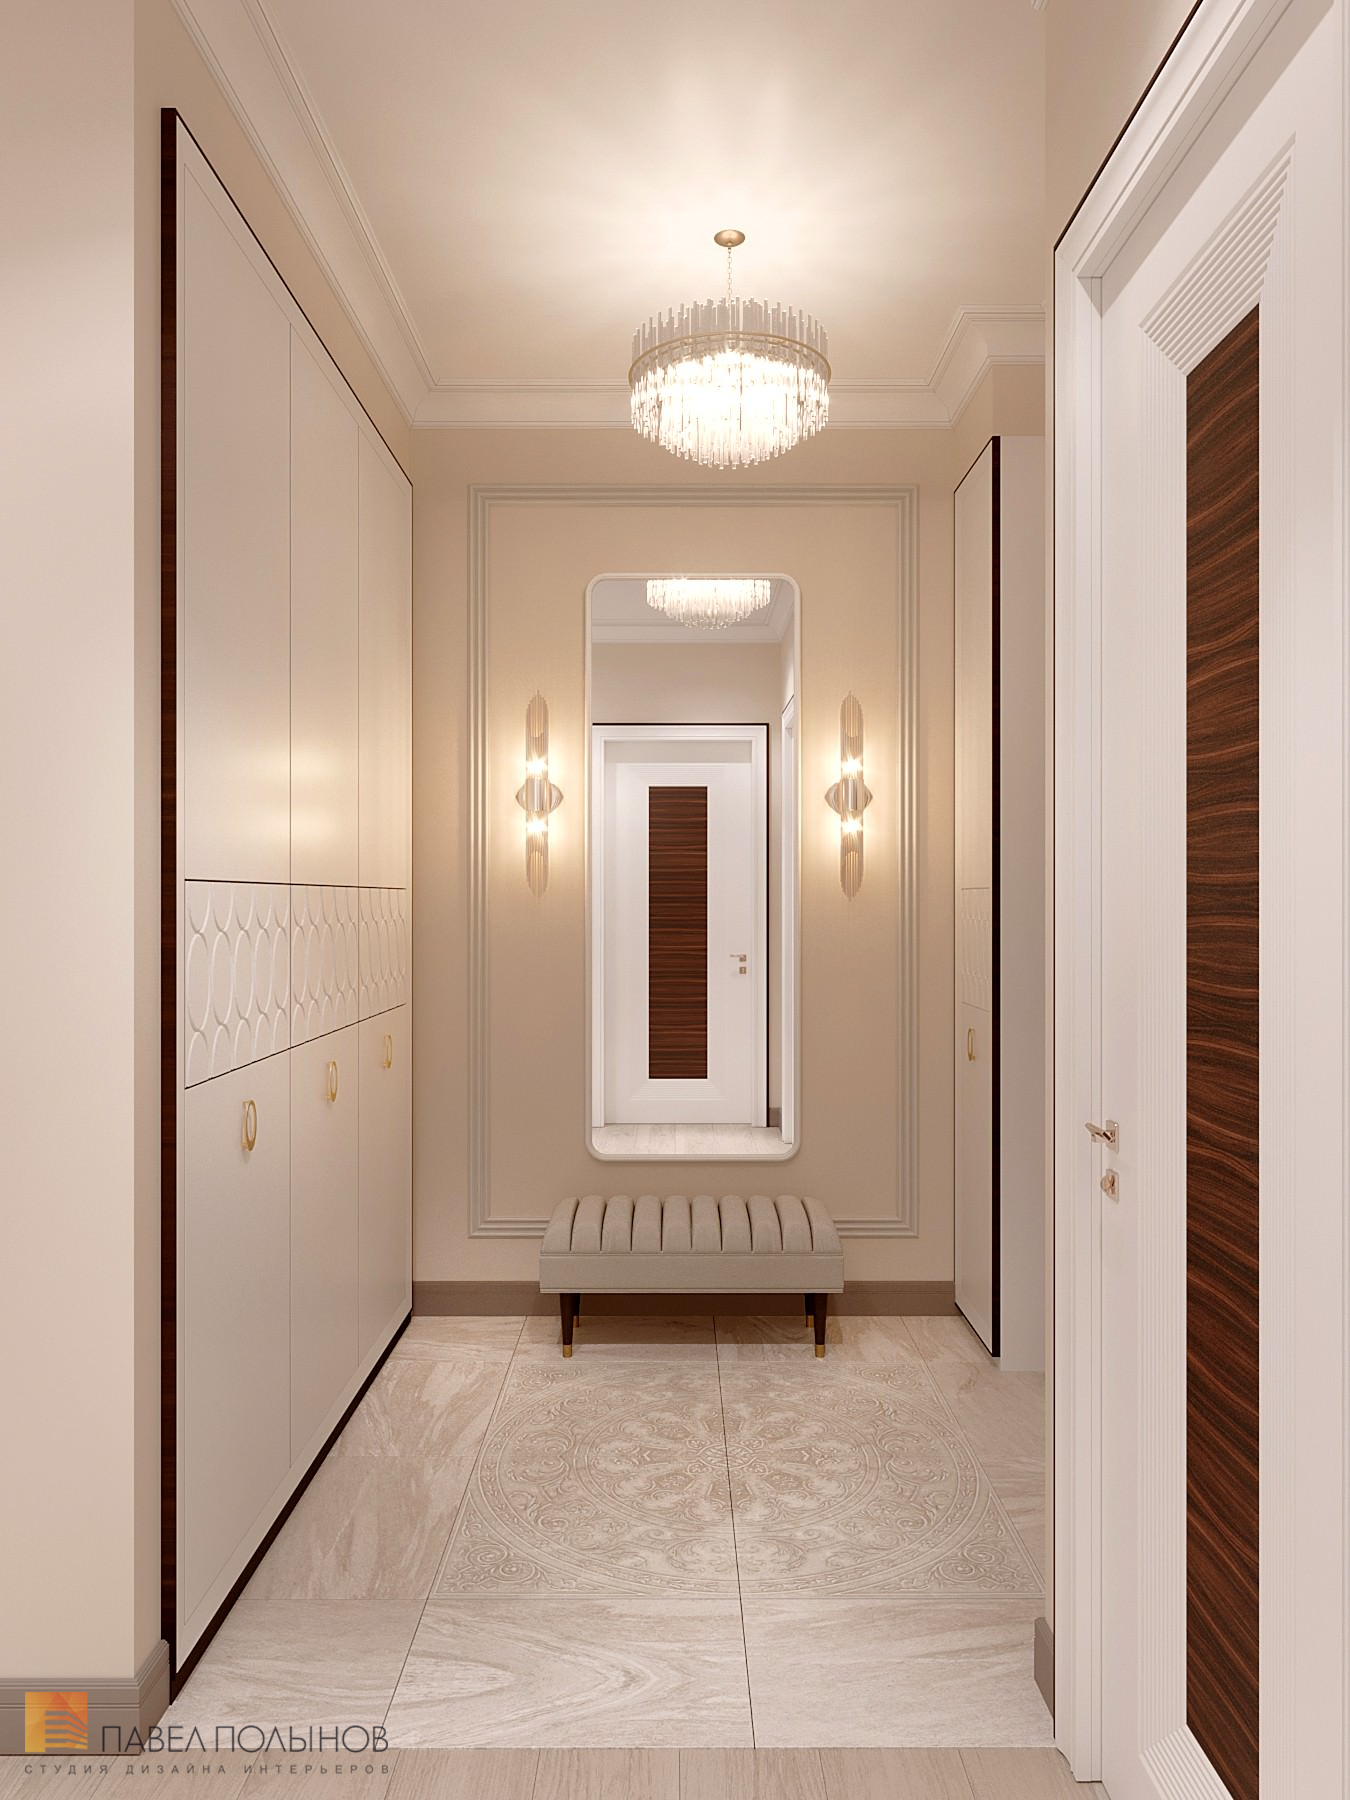 Фото дизайн холла из проекта «Интерьер квартиры в стиле неоклассики с элементами ар-деко, ЖК «Rich Art Club», 75 кв.м.»